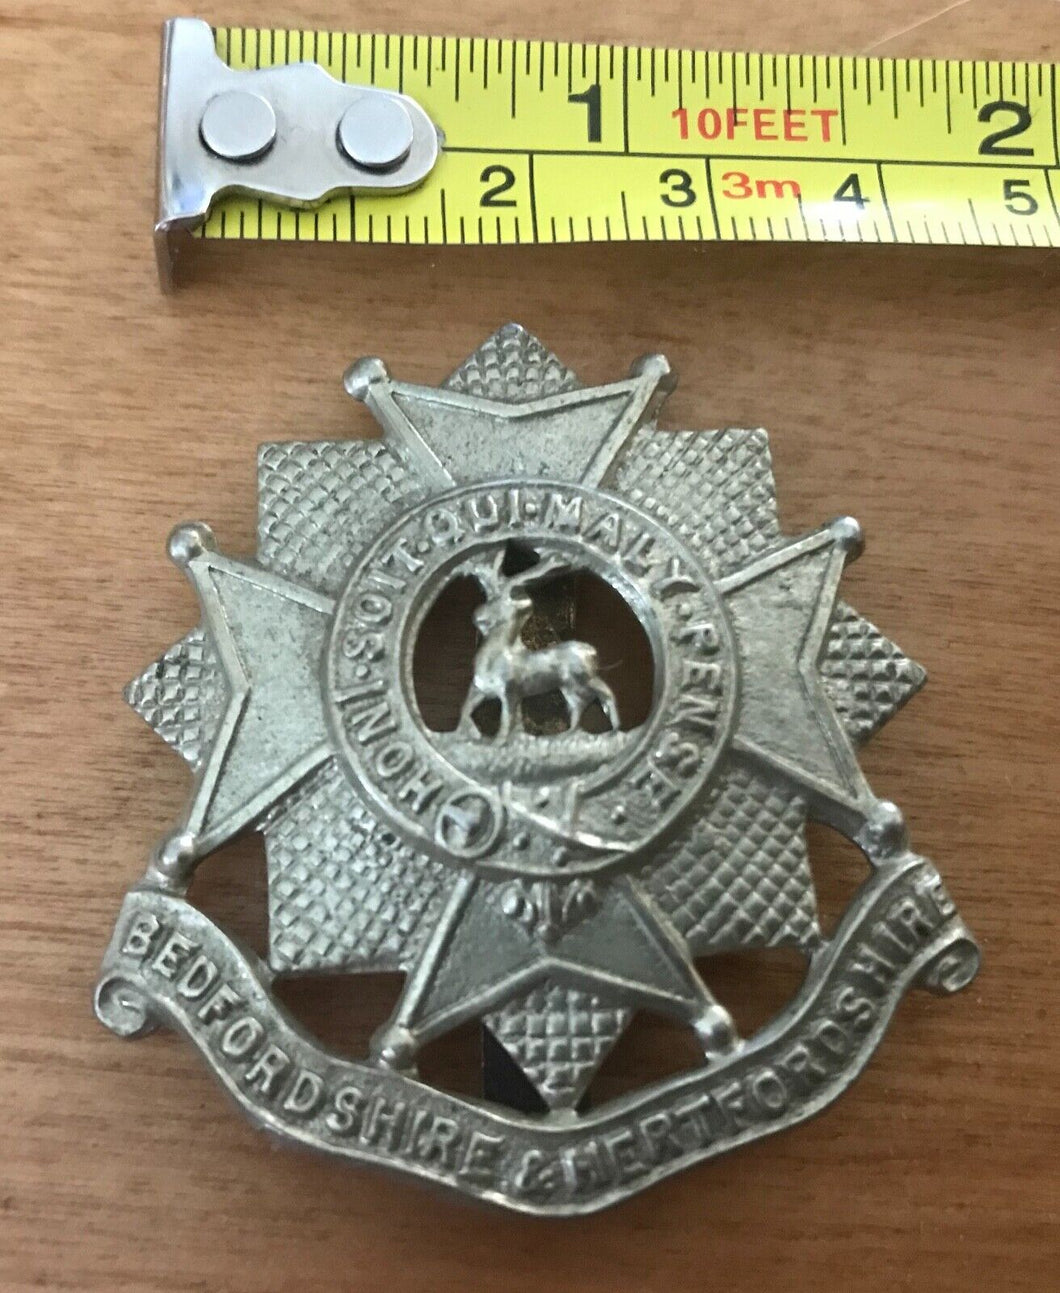 A British Army Bedfordshire and Hertfordshire Regiment cap badge             B2